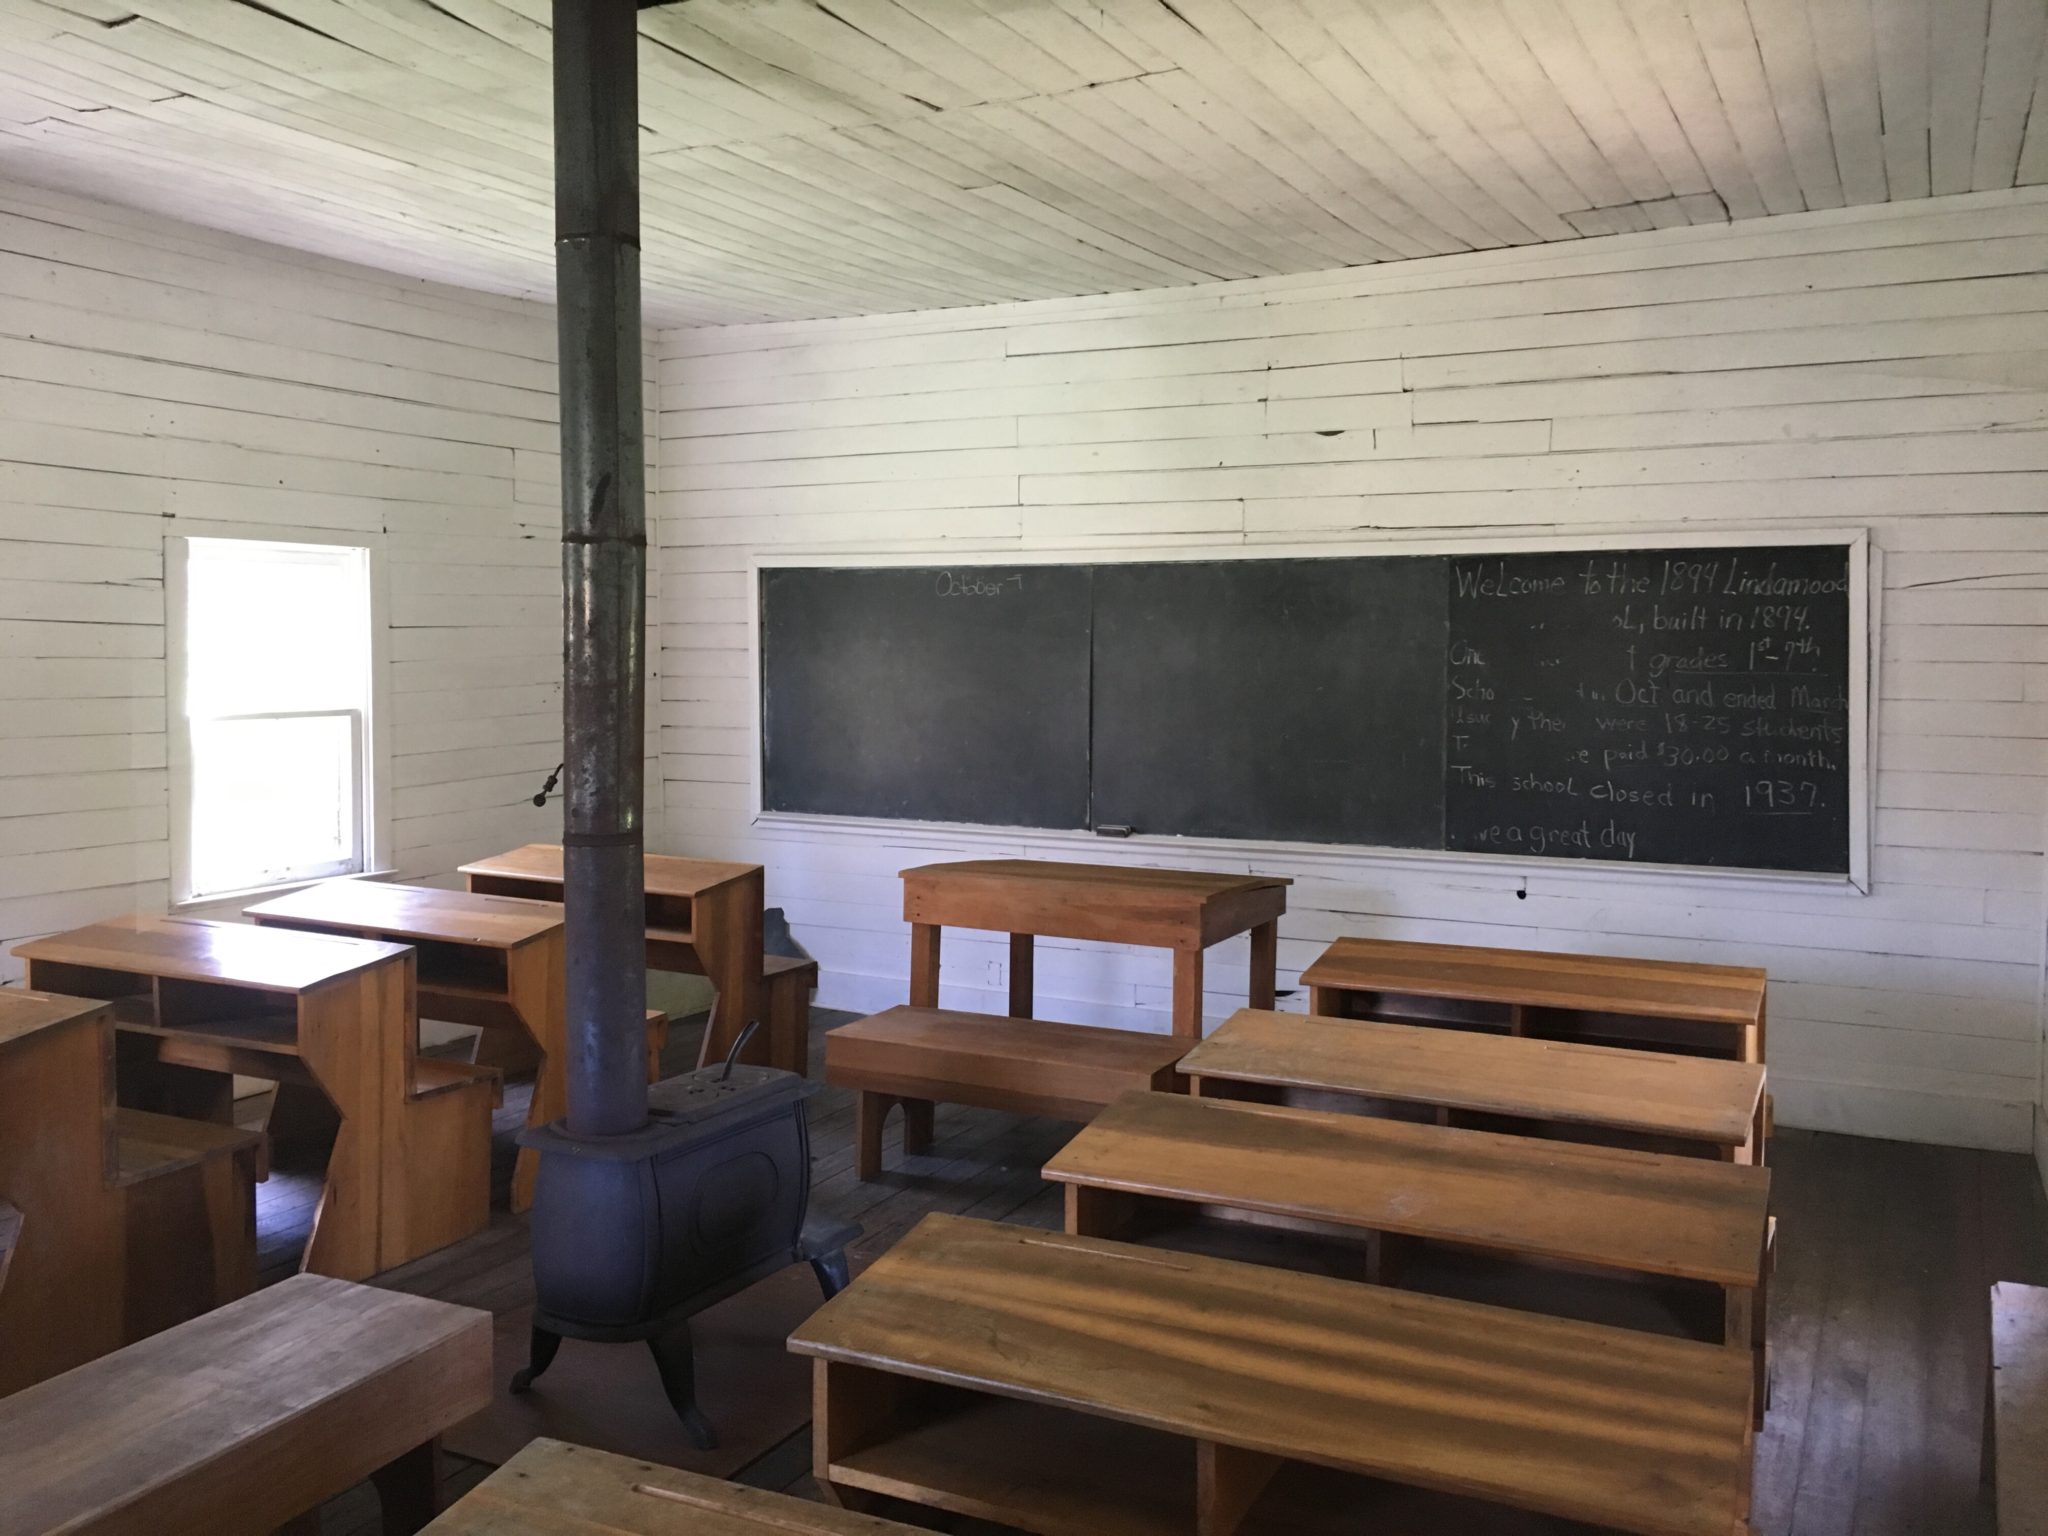 Inside the schoolhouse